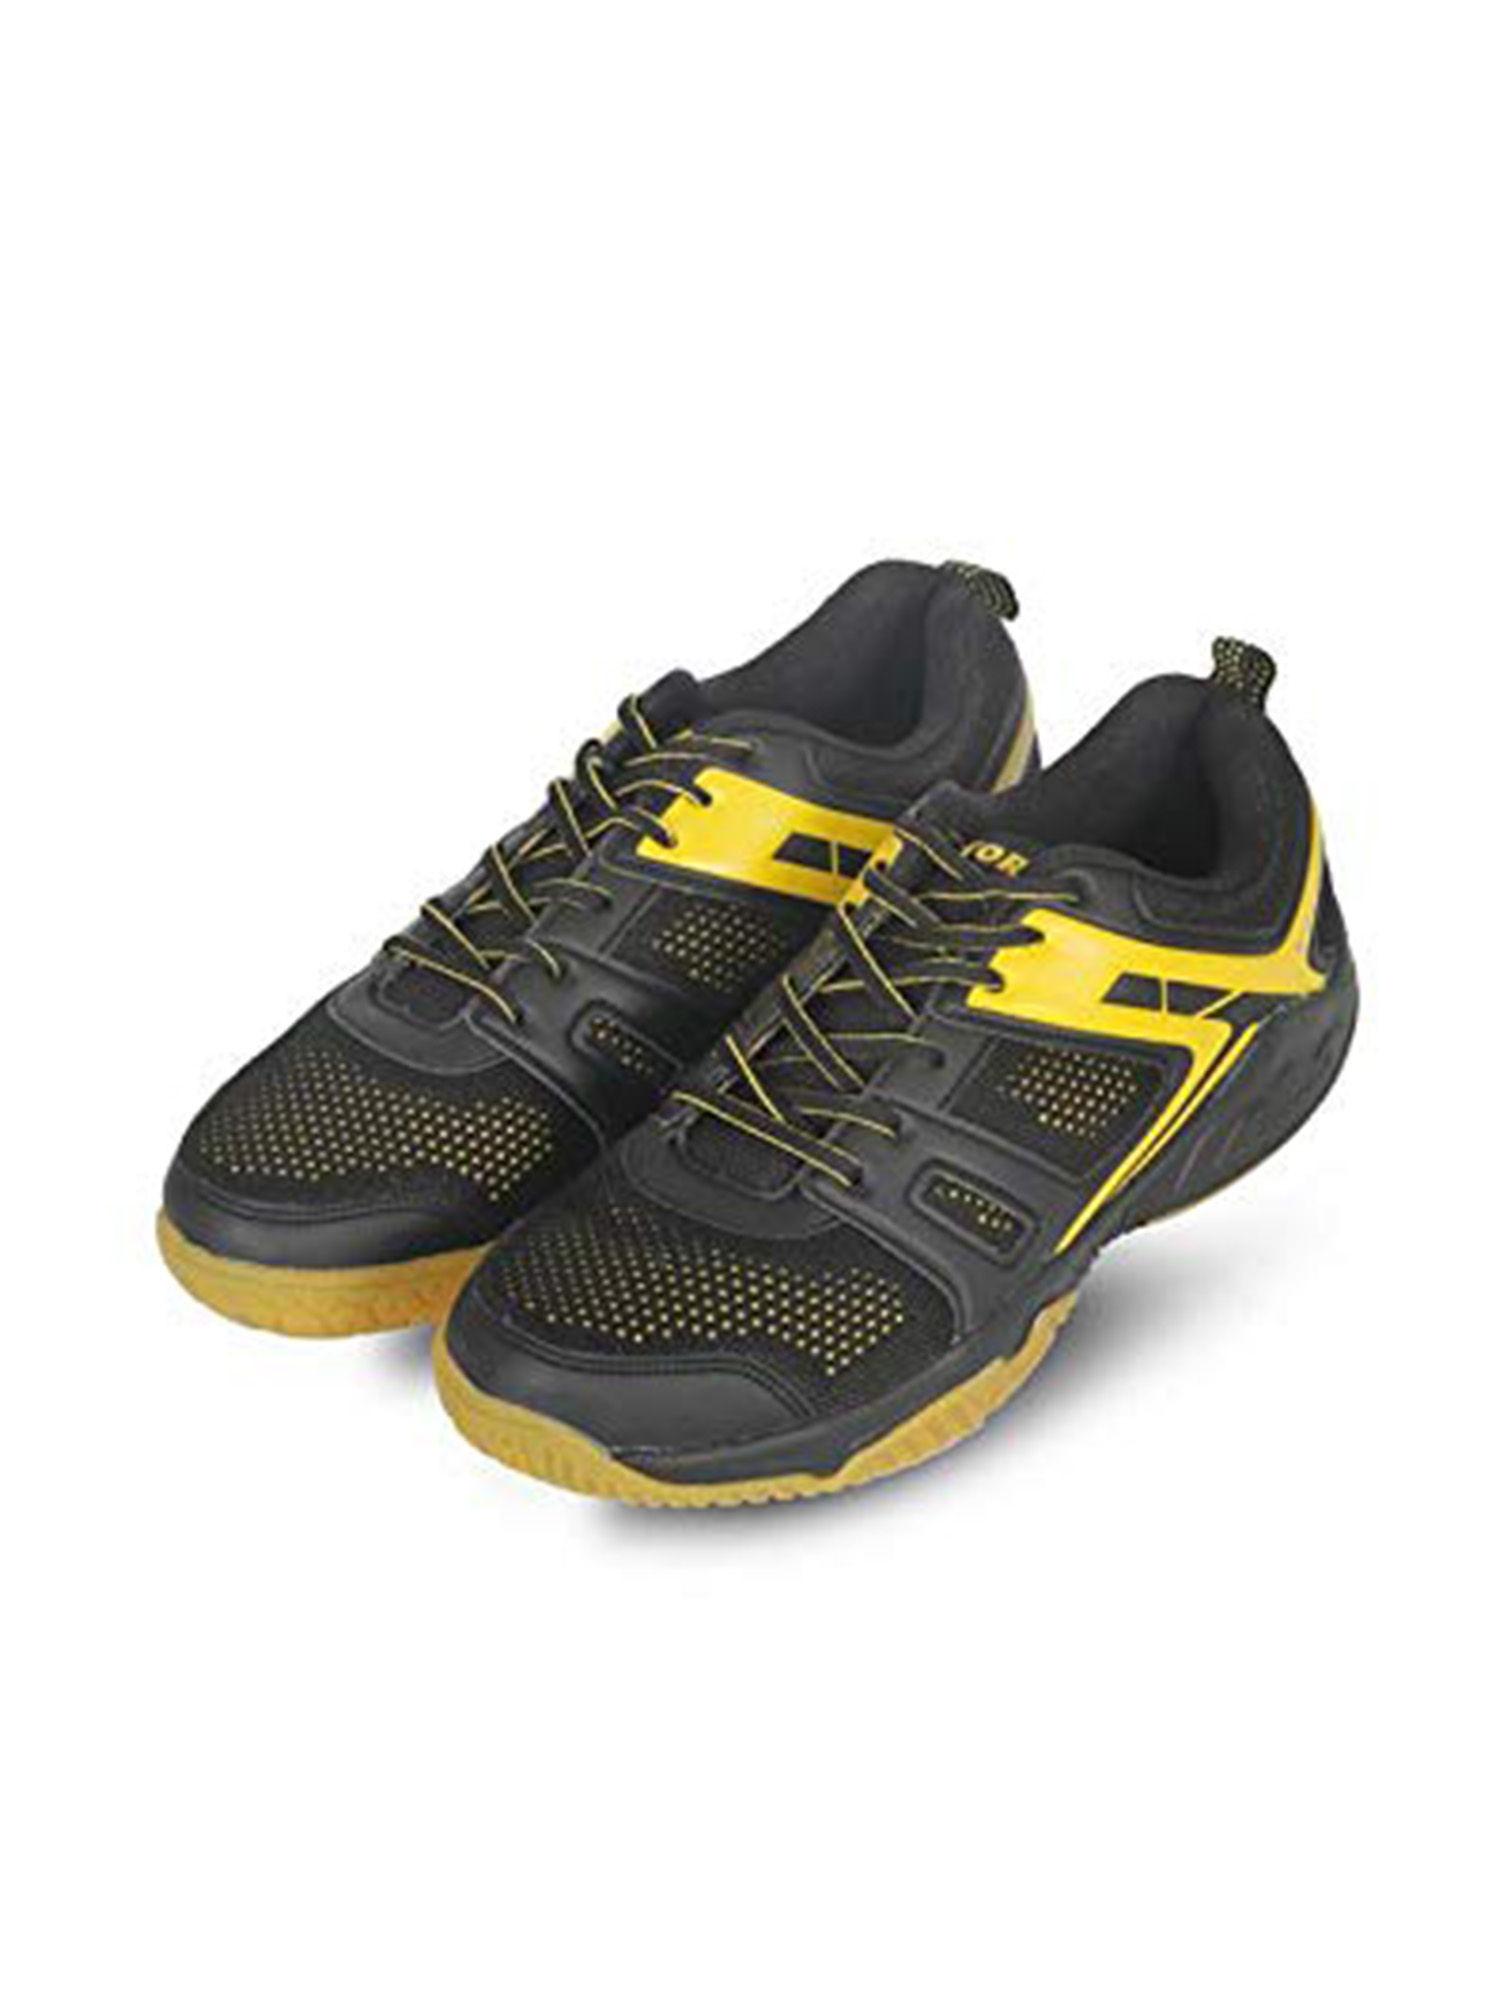 cs-2060 court shoes for men (black-yellow)